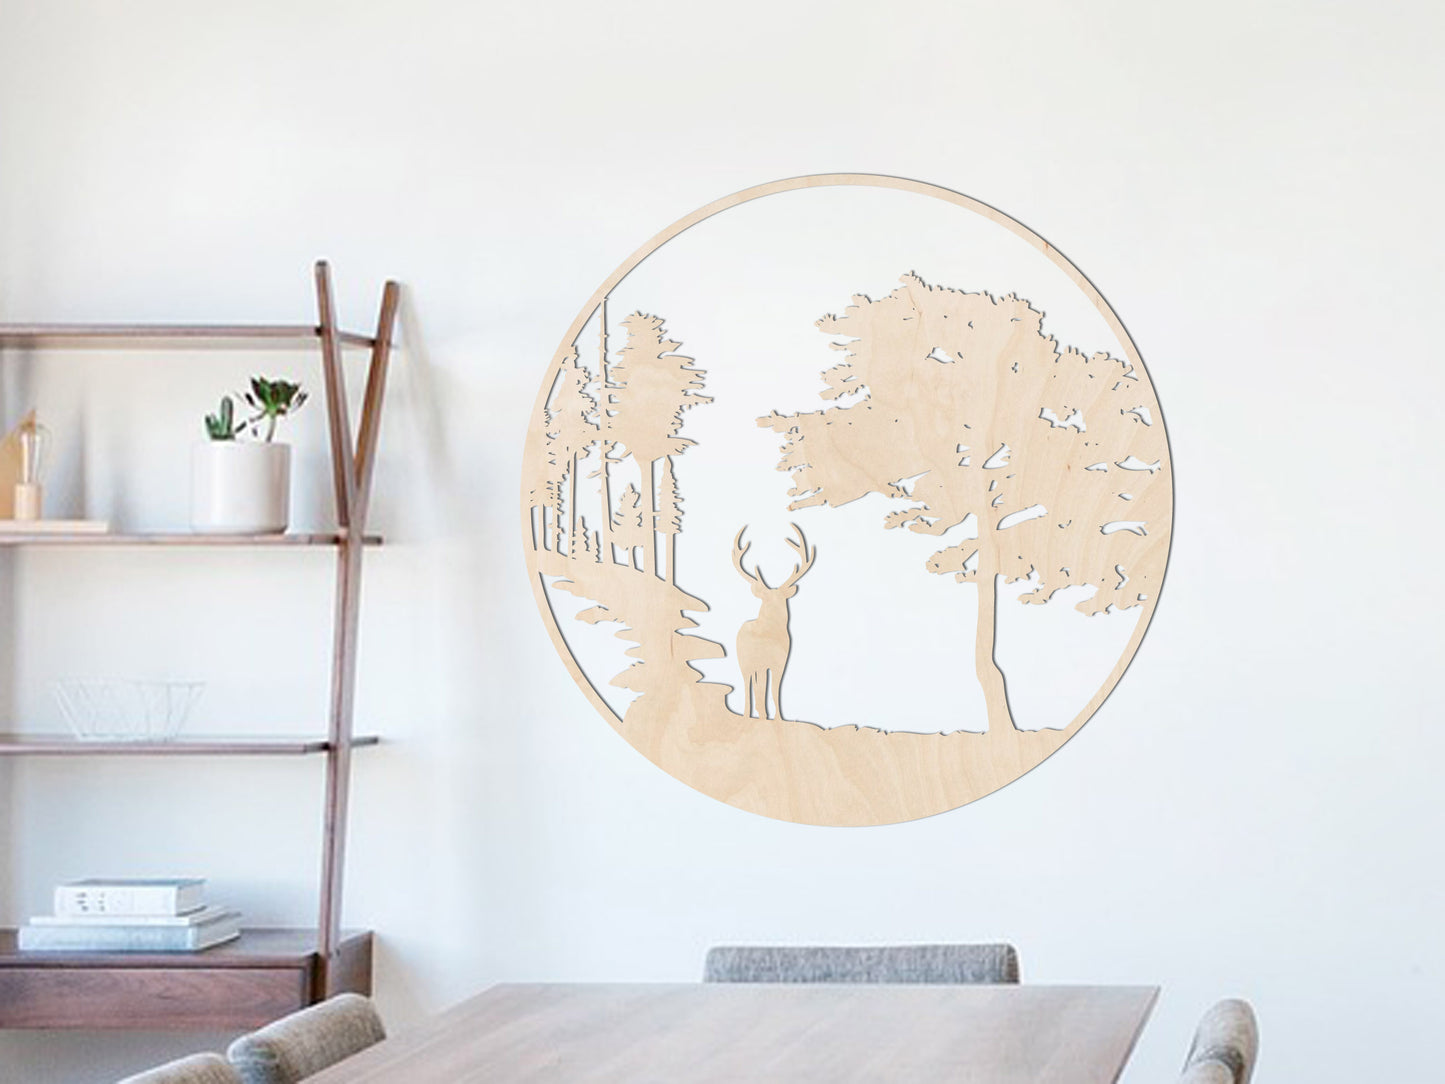 Natuur Interior - slaapkamer-woonkamer inspiratie nature- stijl- modern